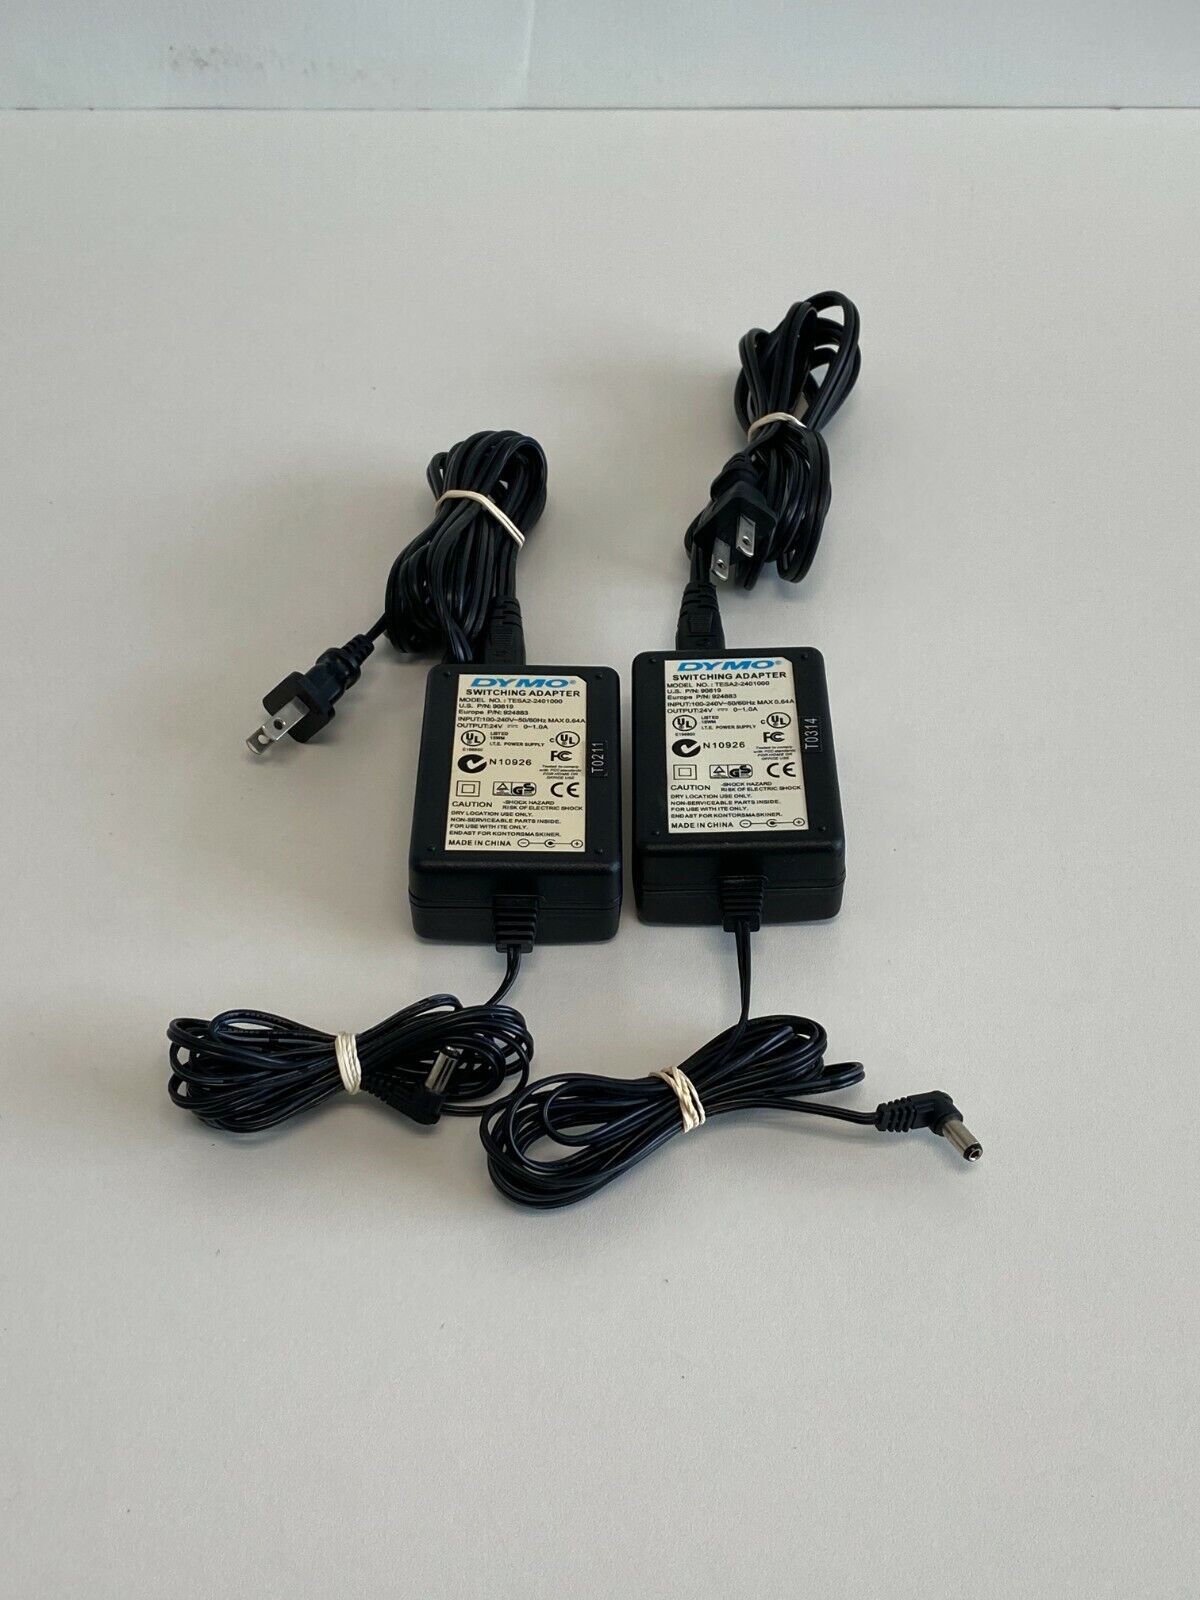 BB25:  Lot of 2 Genuine Dymo TESA2-2401000 Label Printer Power Supply Adapter